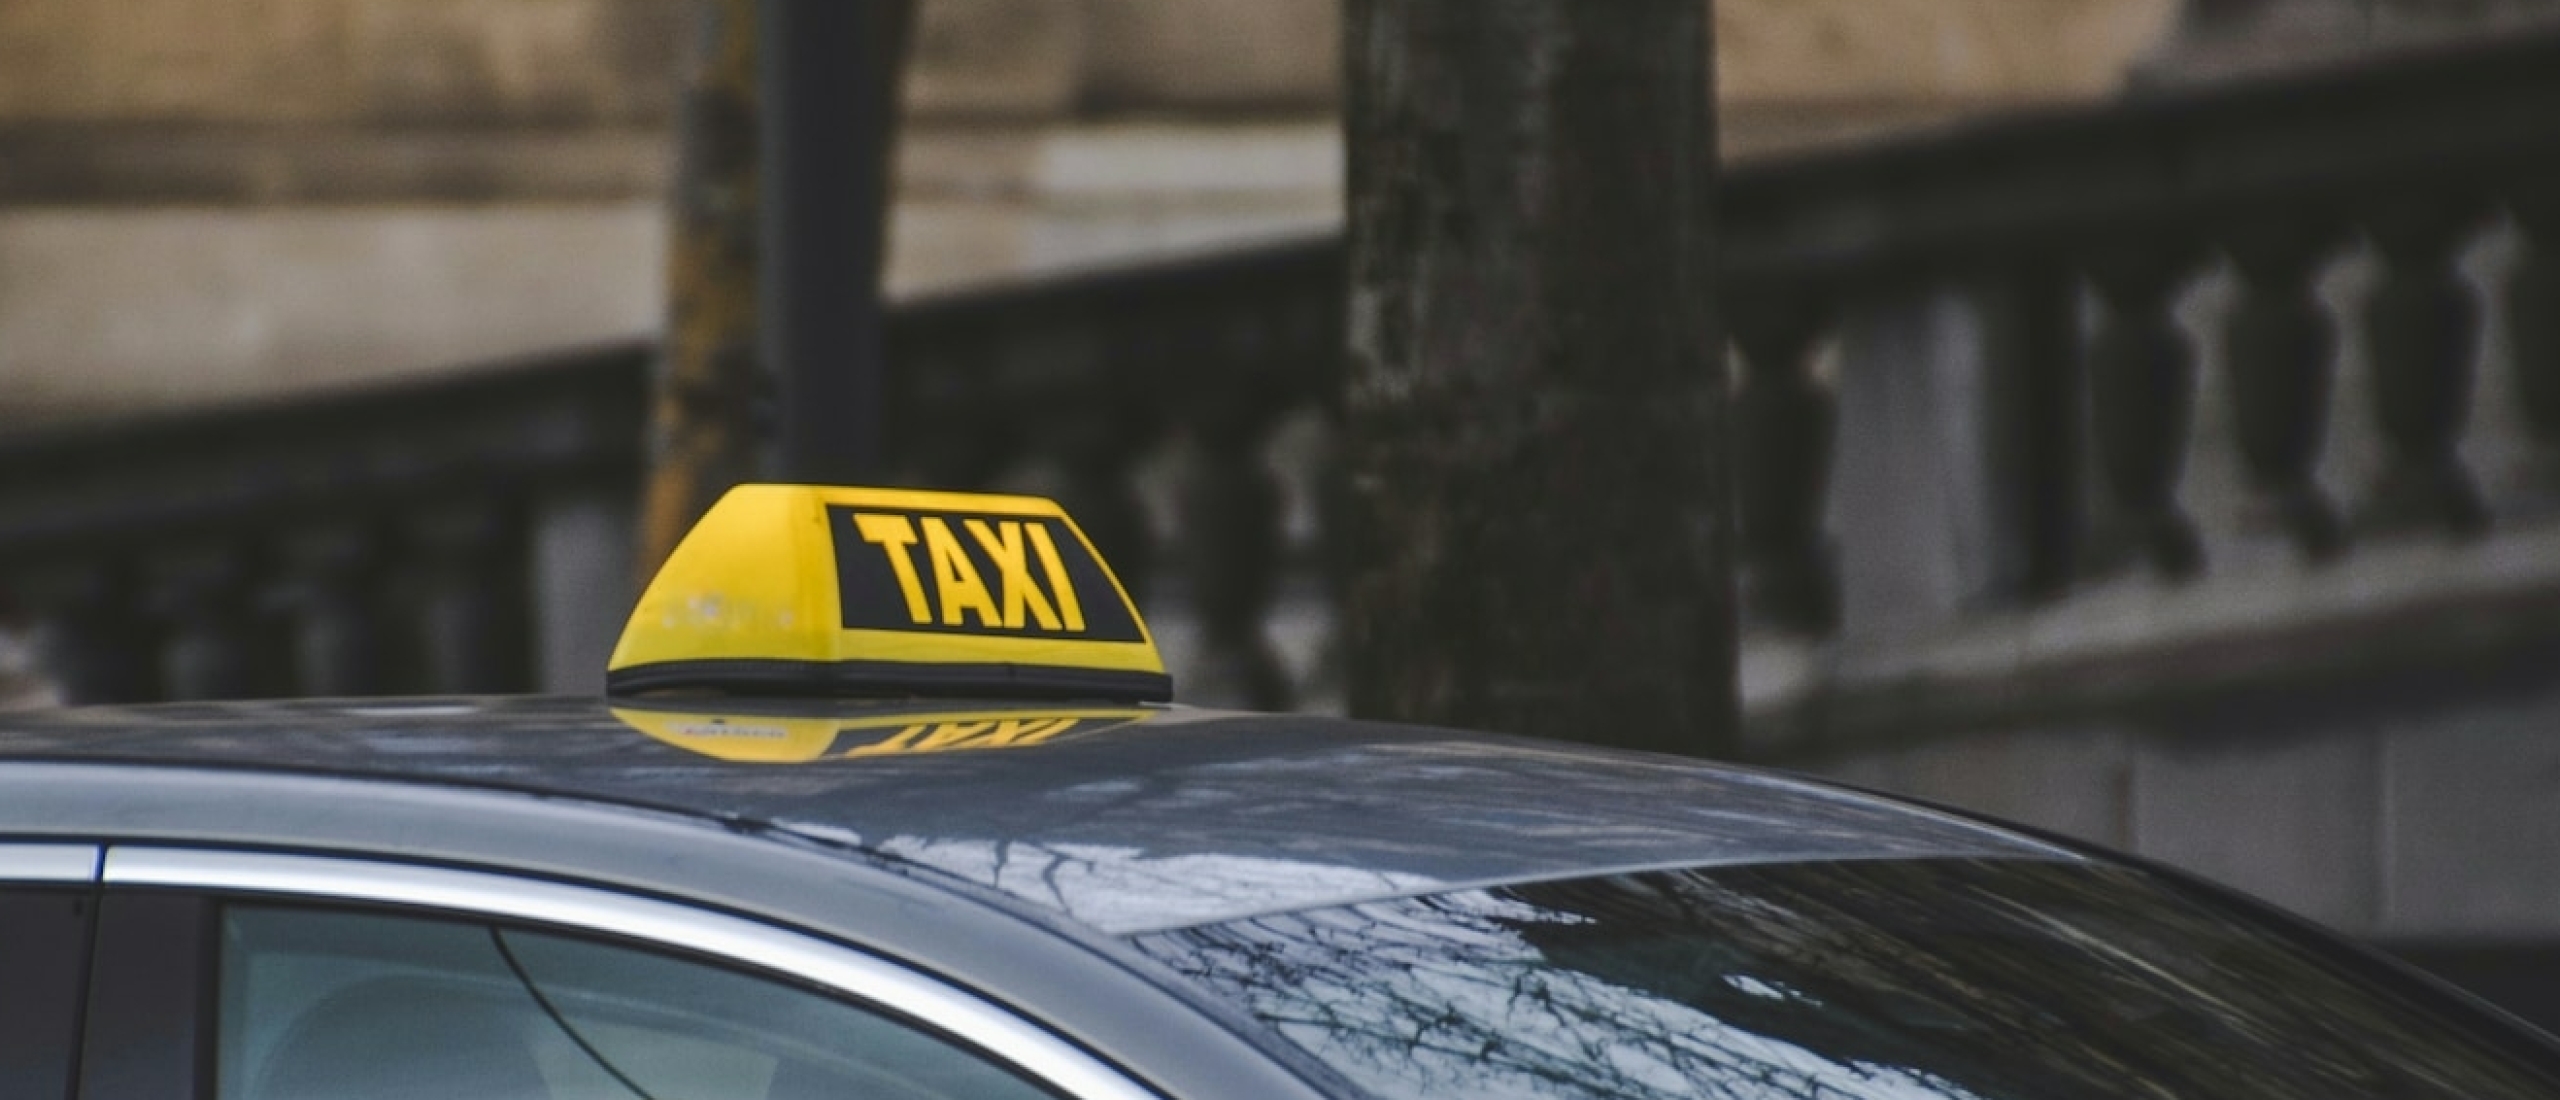 Taxi Ambulance 112